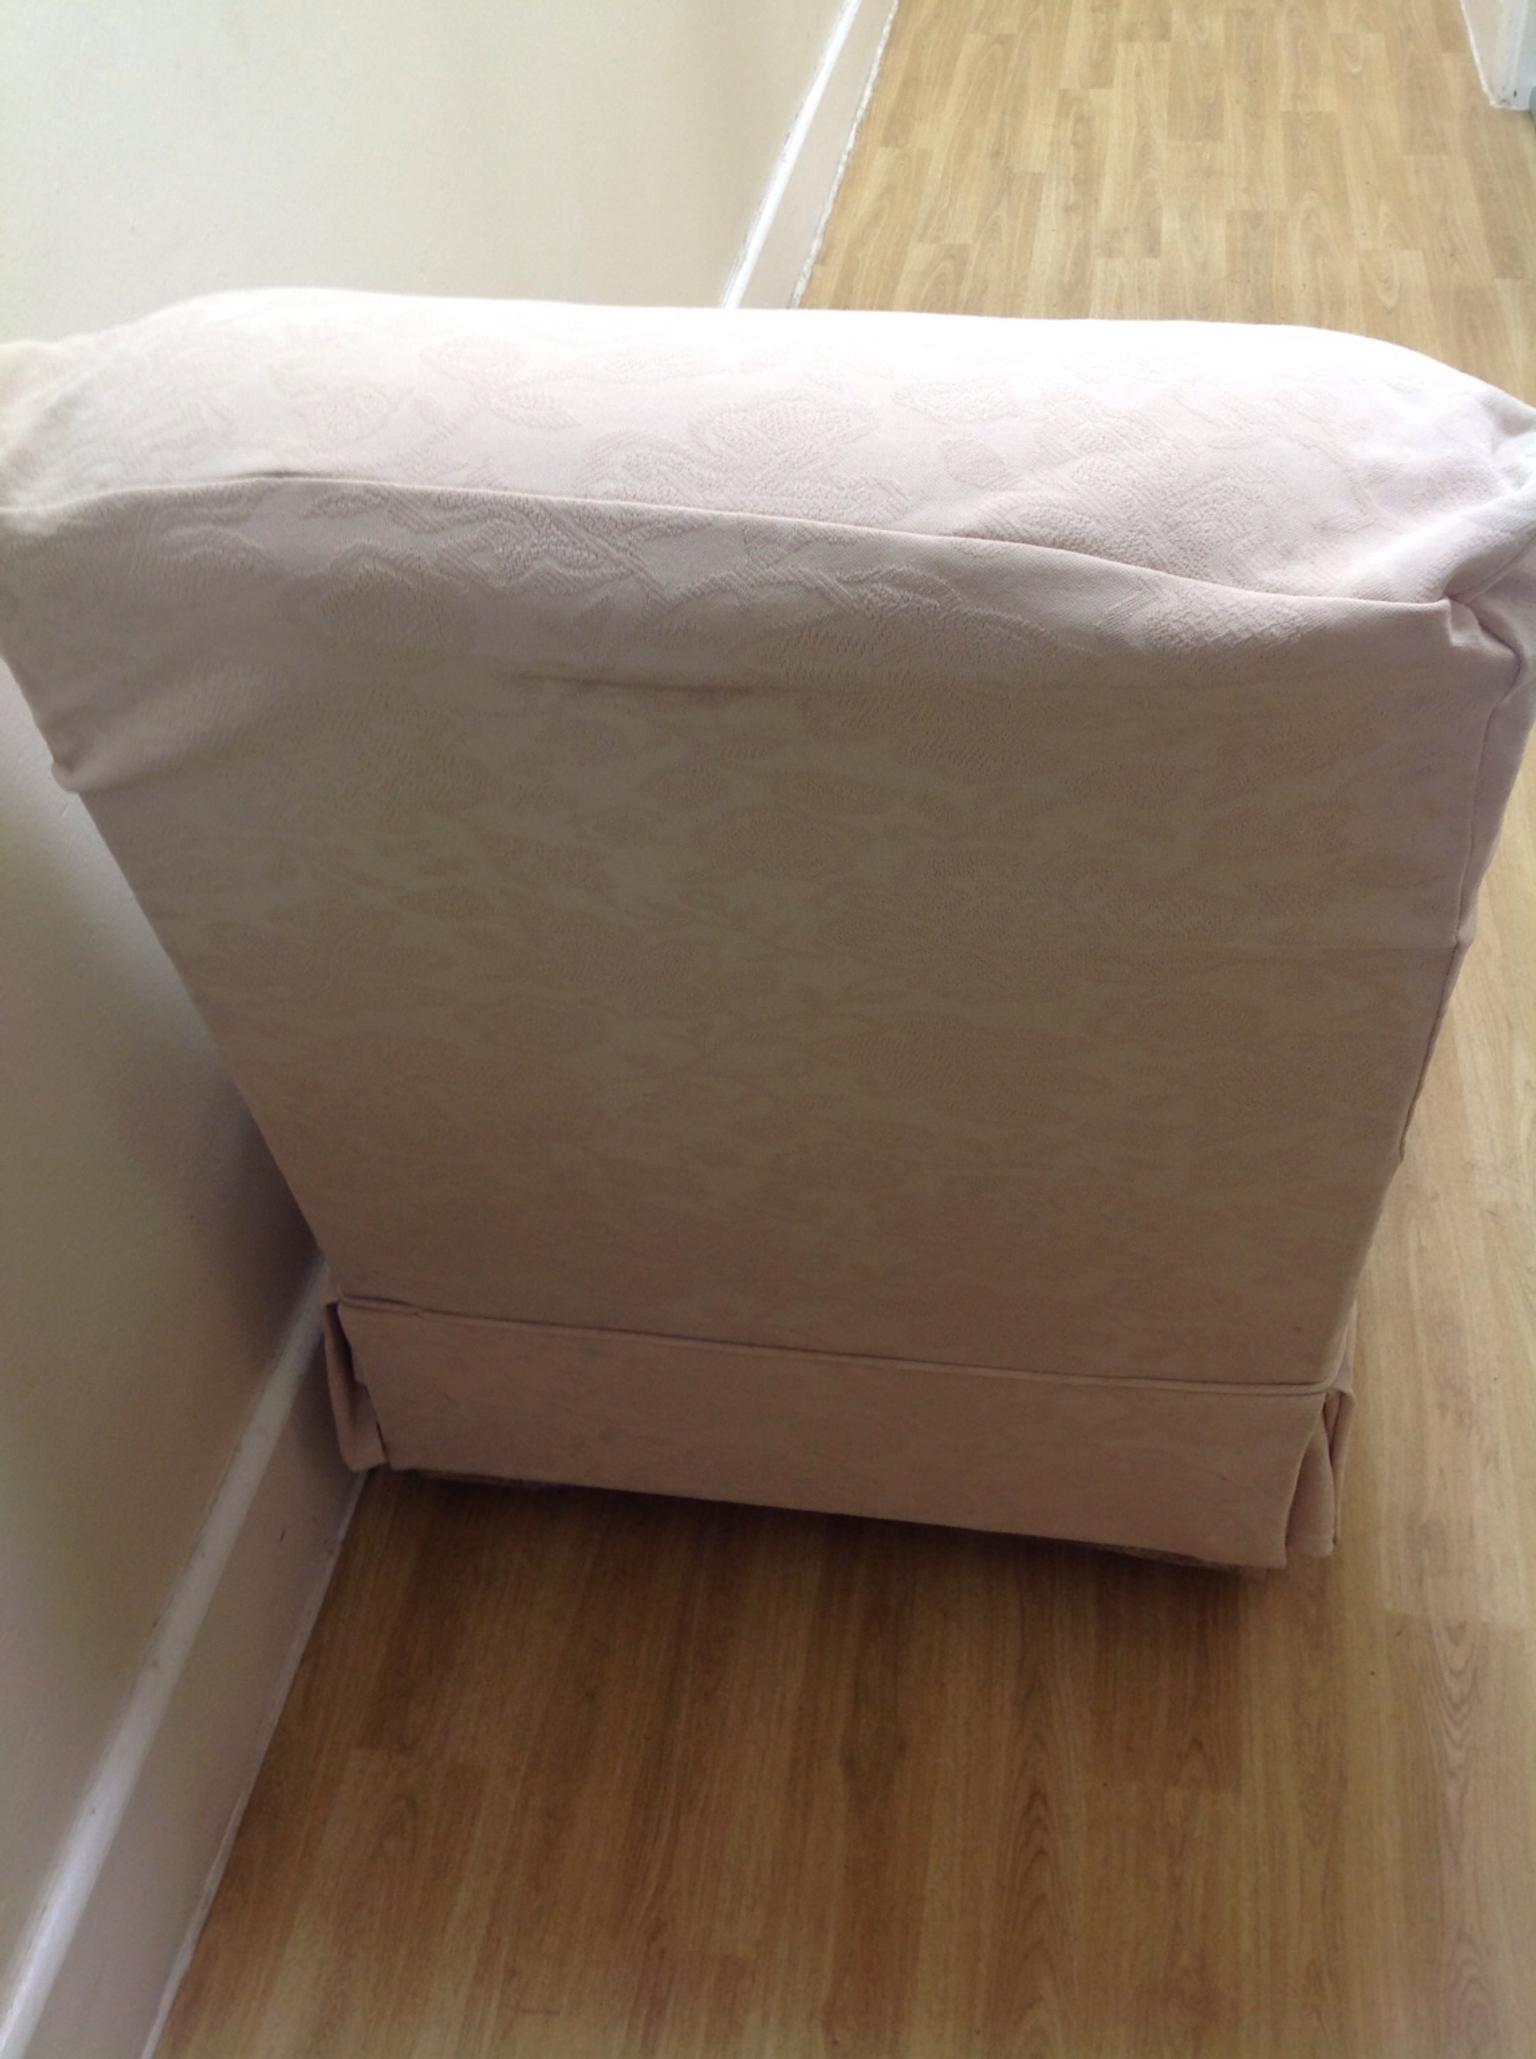 Gorgeous Cream Armchair Plumbs Covers Free In M30 Salford Fur